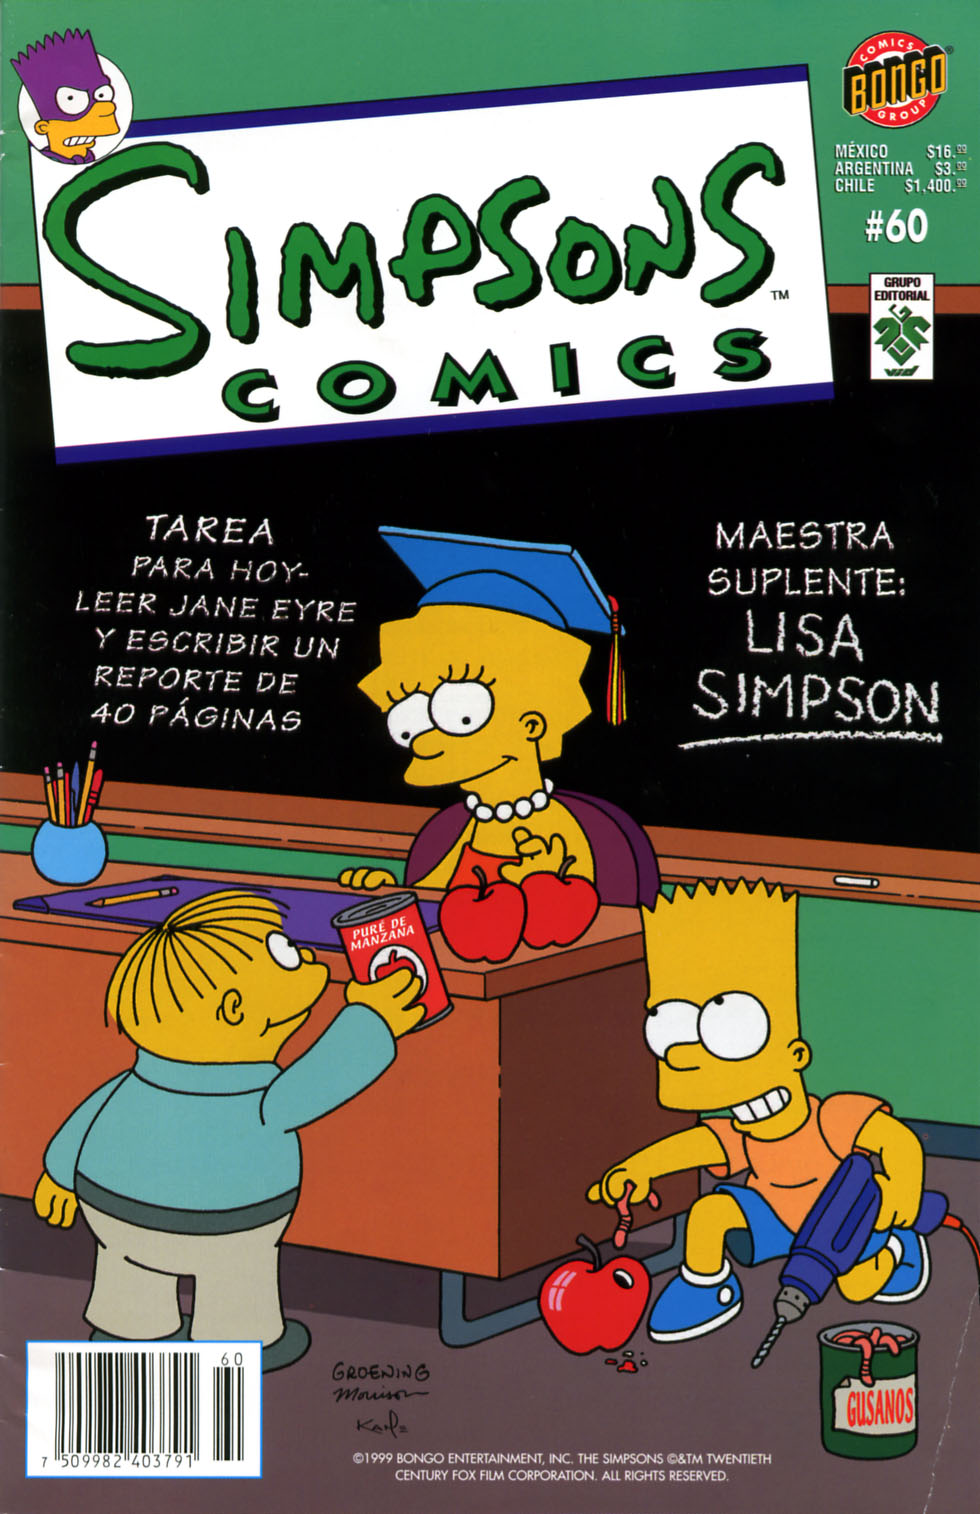 Post Croc Lisa Simpson The Simpsons Vercomicsporno Sexiz Pix 